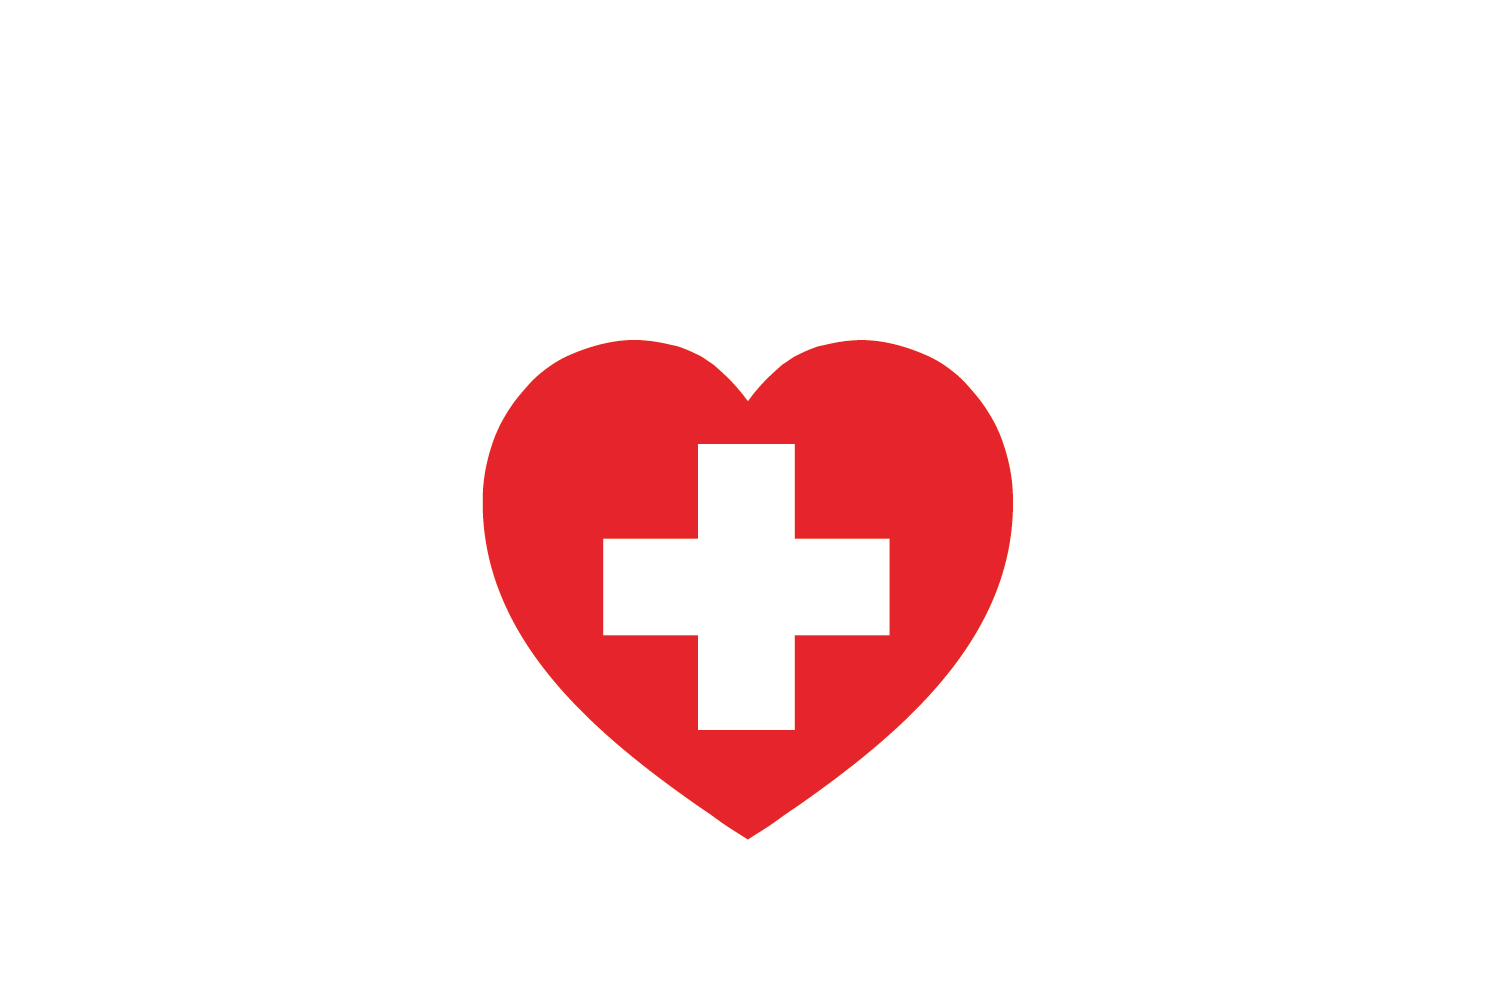 Love Ride Switzerland Logo